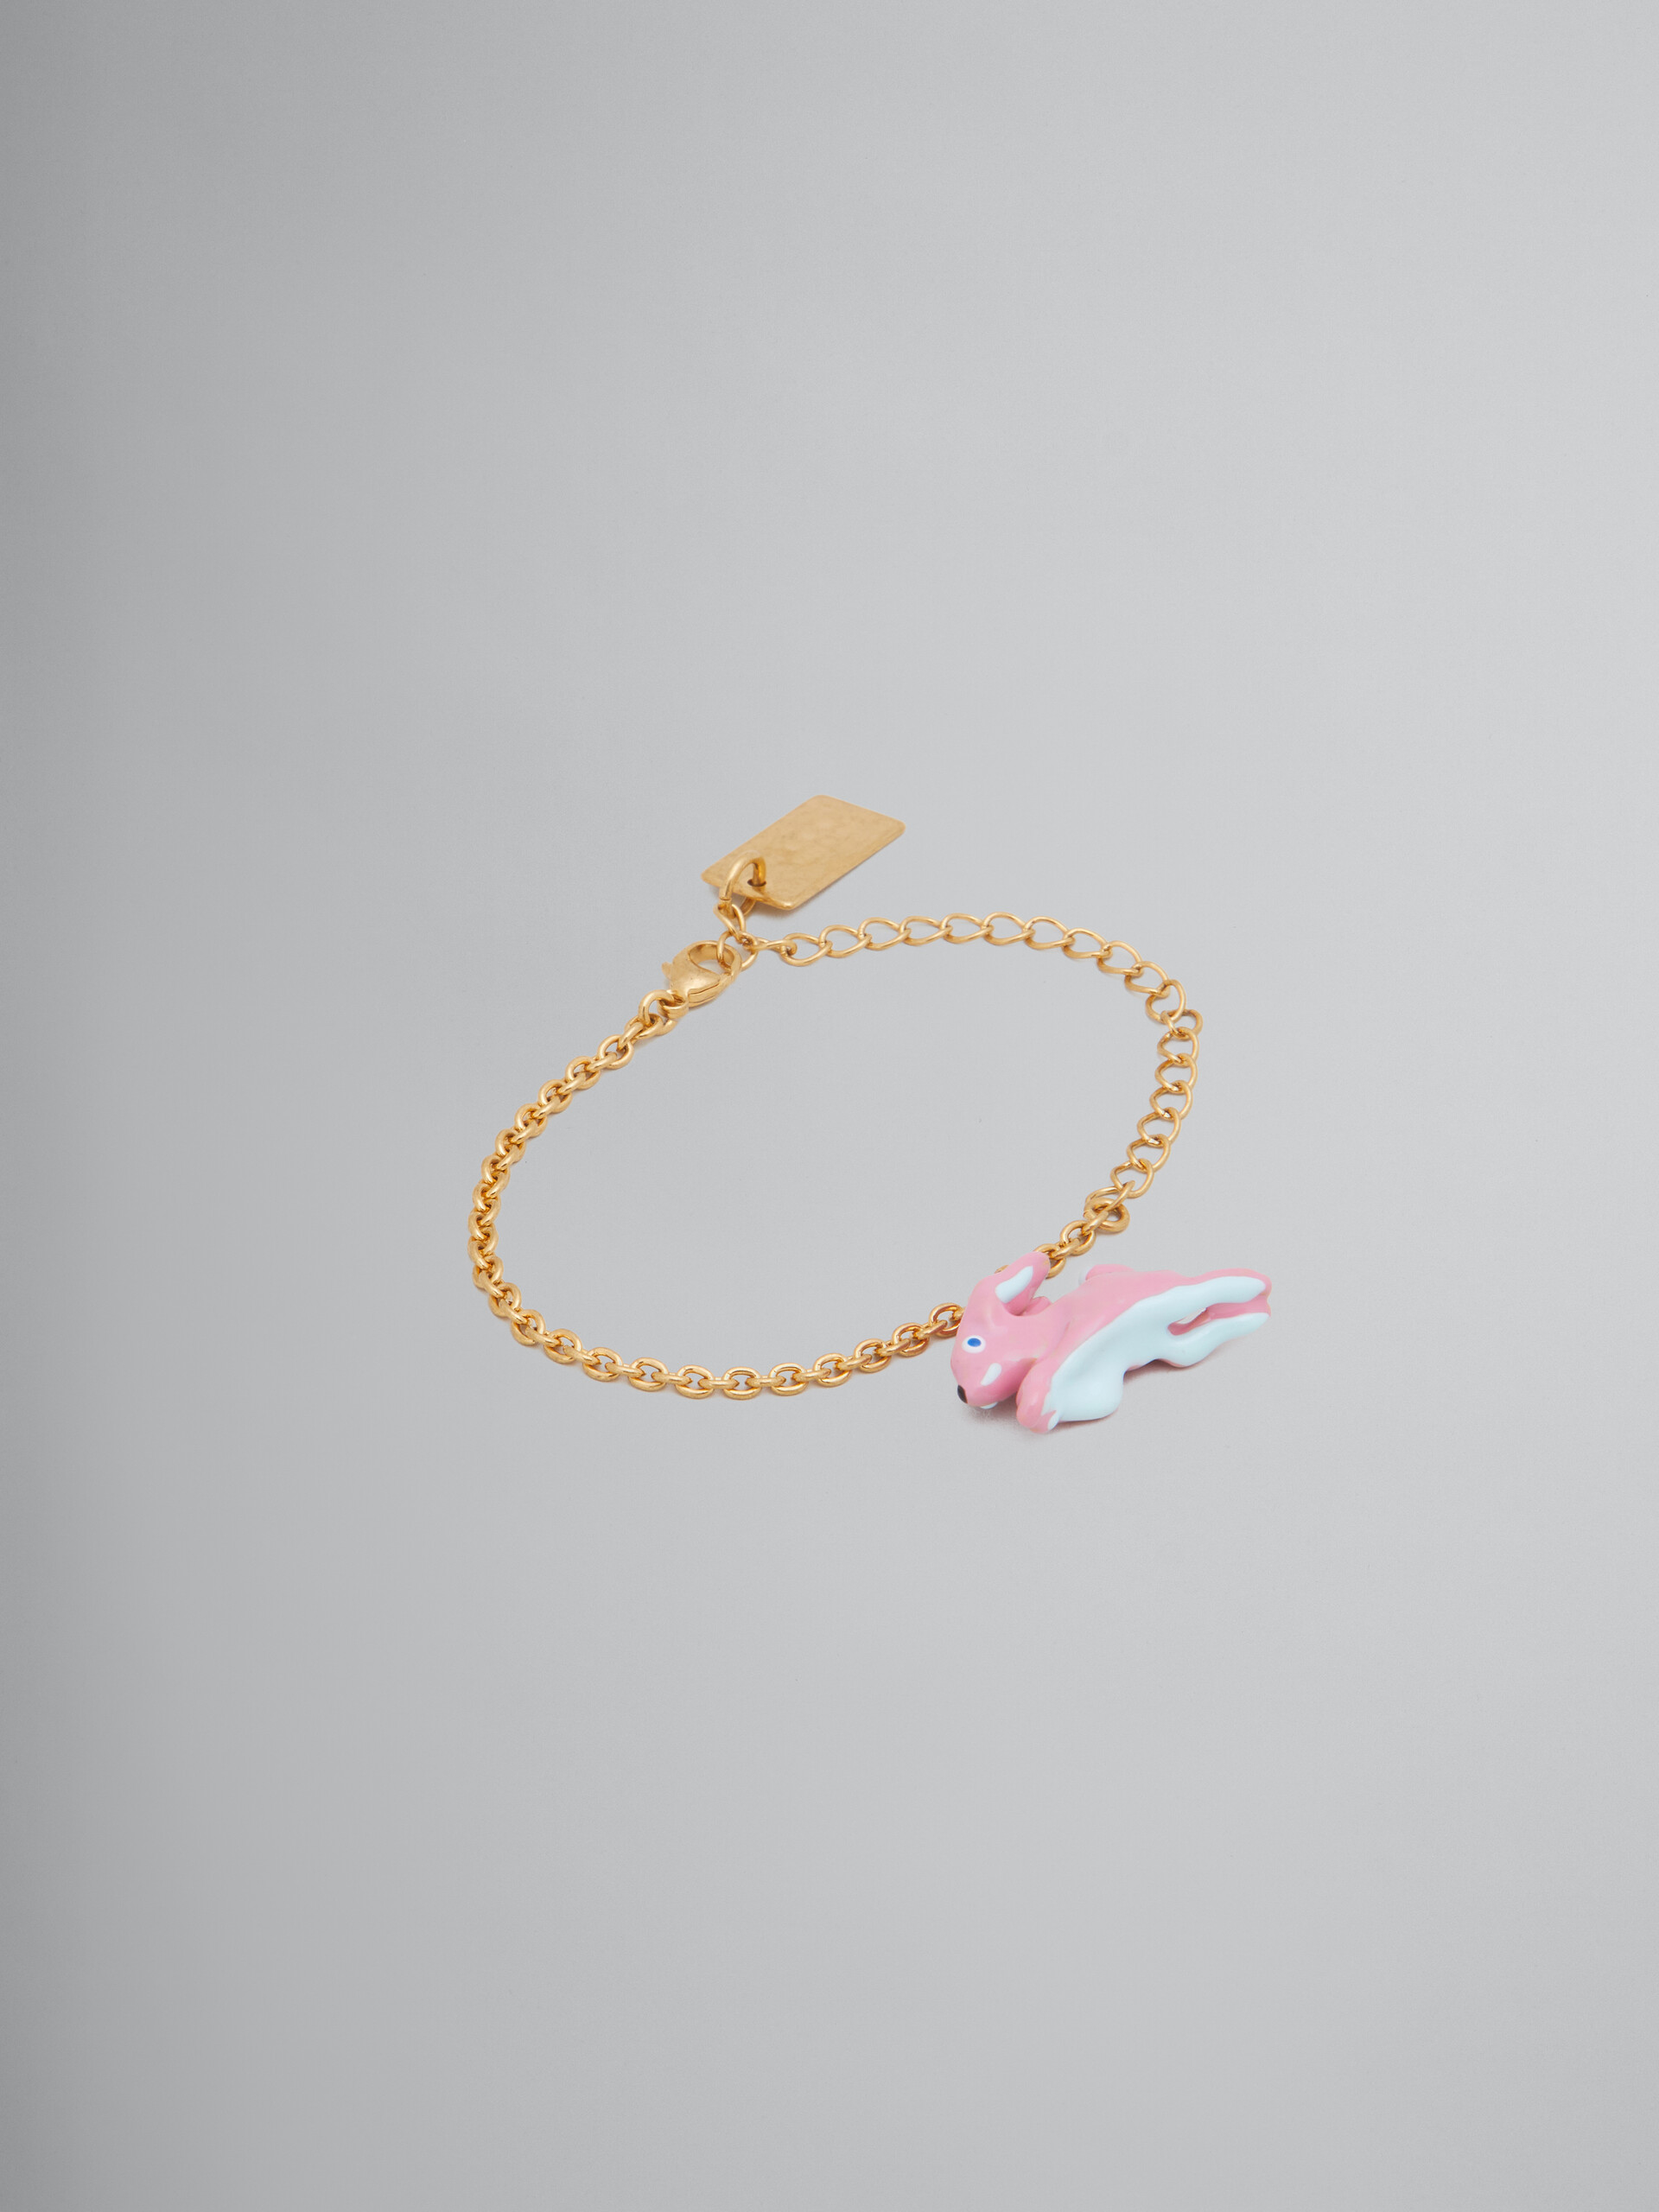 Bracelet with rabbit pendant - Bracelets - Image 1